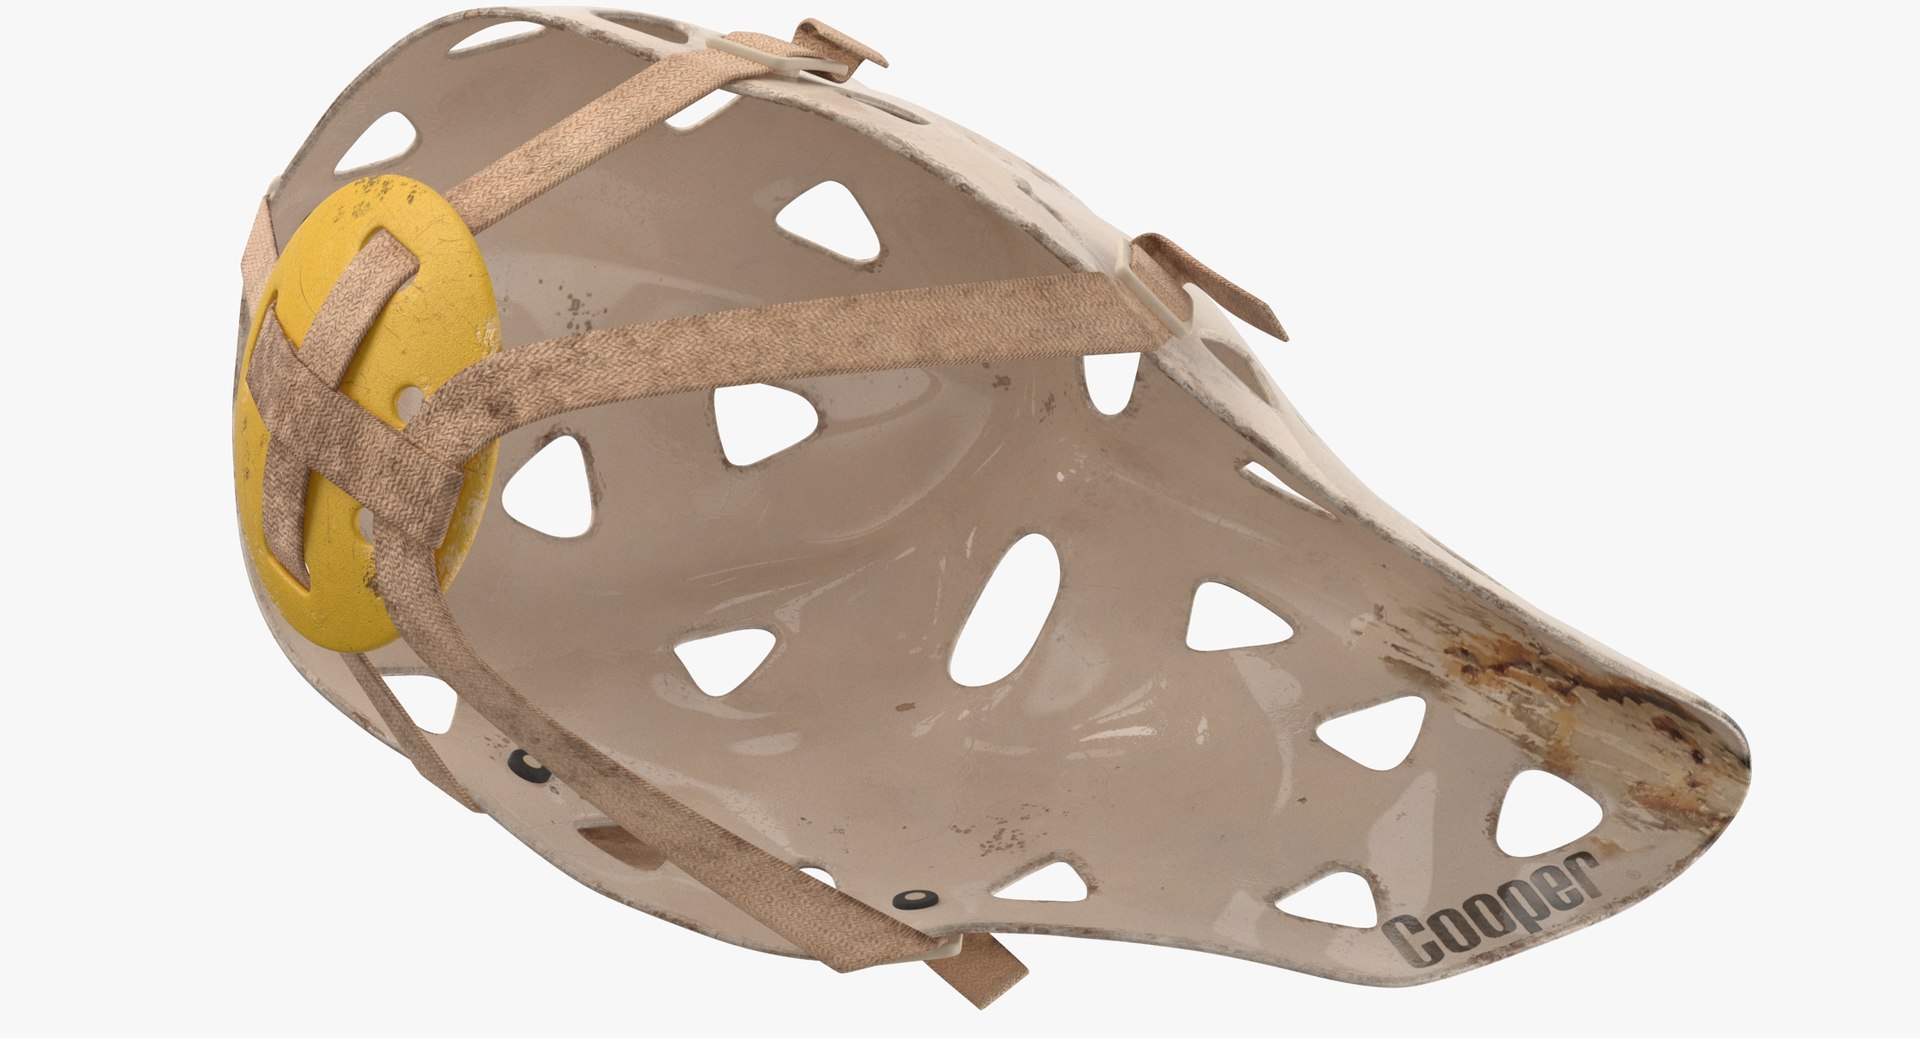 3D ice hockey goalie mask model - TurboSquid 1471807